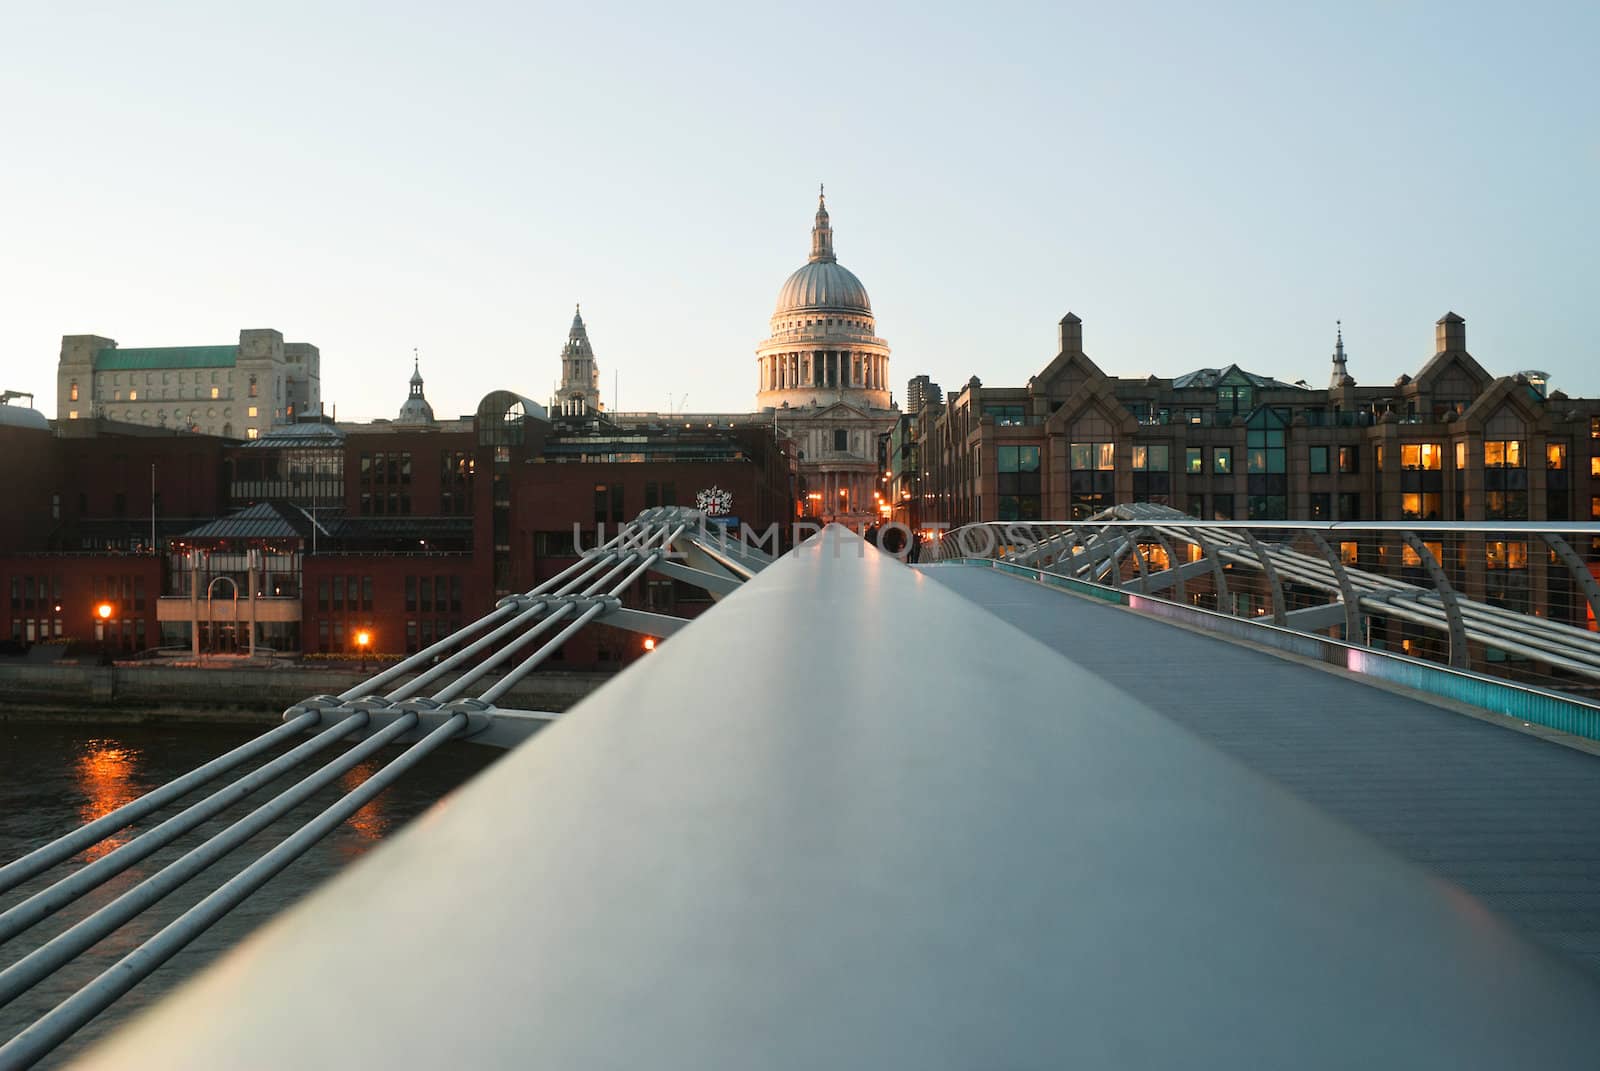 View to St Pauls from Millenium Bridge in London by gandolfocannatella